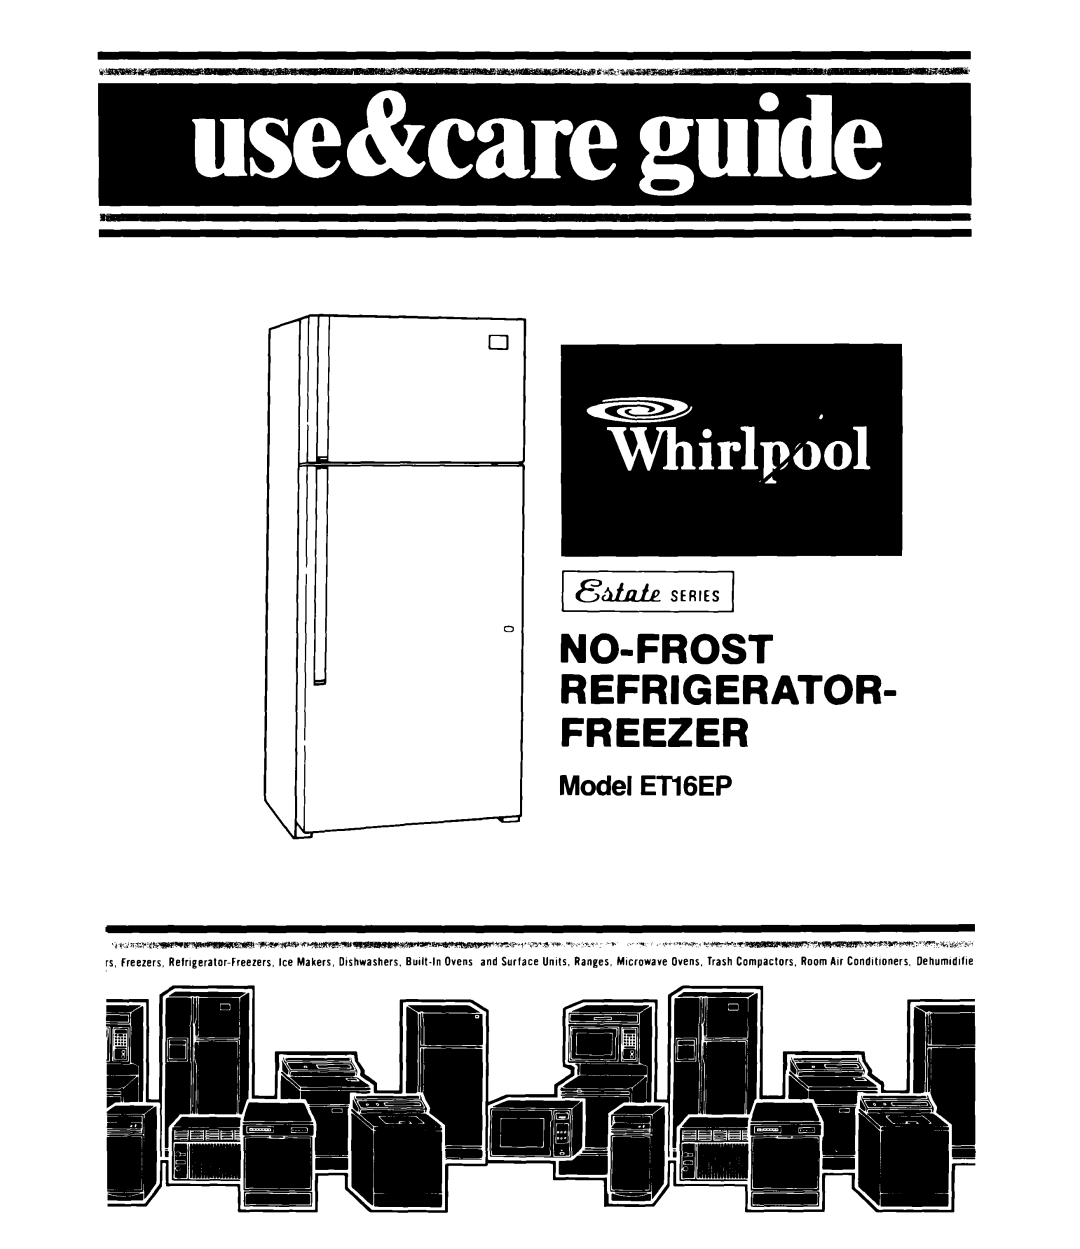 Whirlpool ET16EP manual Noifrost Refrigerator Freezer, Model ETIGEP, wx!wms~, ~c--~‘~r?~, 3 7% 1-.‘-.T’, ~~~?~~~~ 